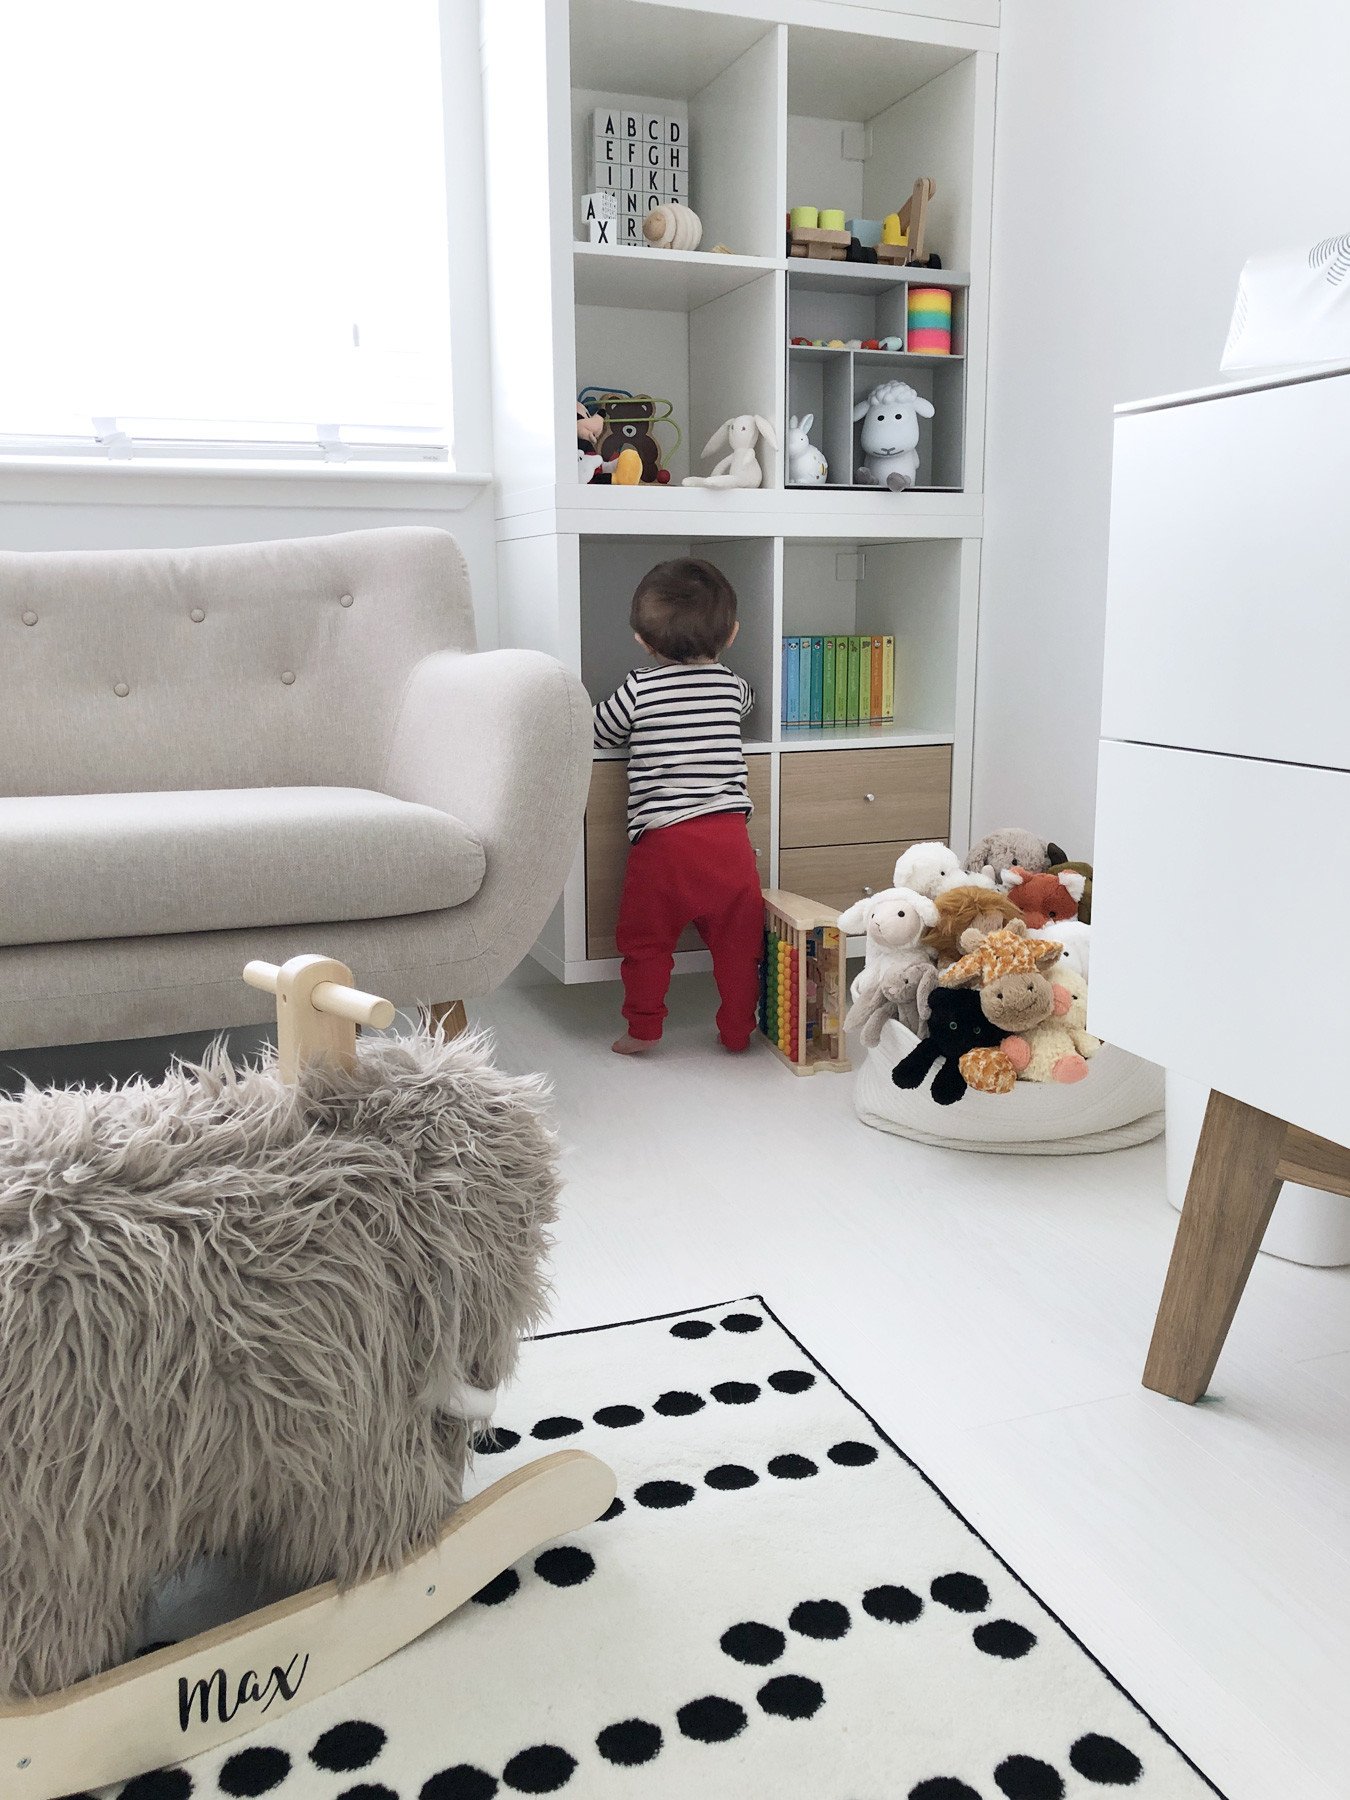 IKEA Kallax shelving unit in baby's bedroom